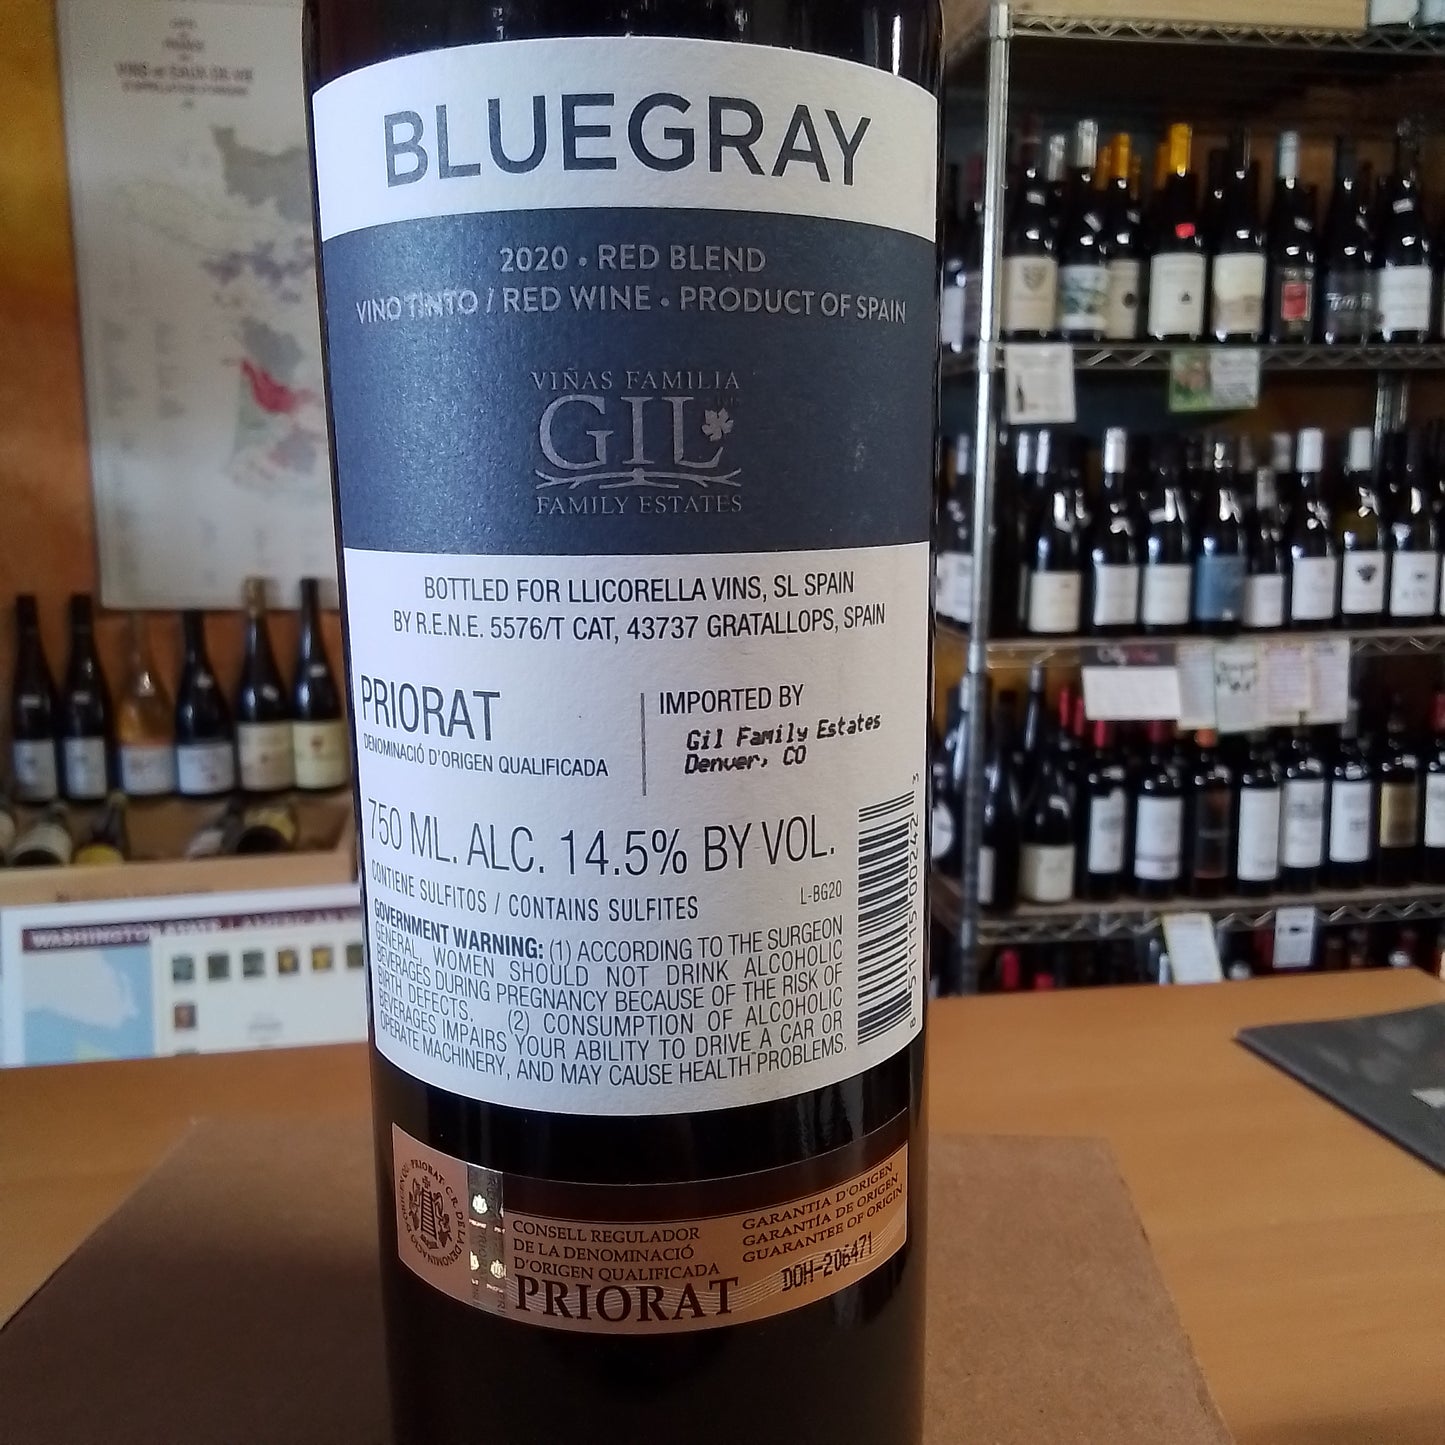 LLICORELLA VINS 2020 Red Blend 'Bluegray' (Priorat, Spain)